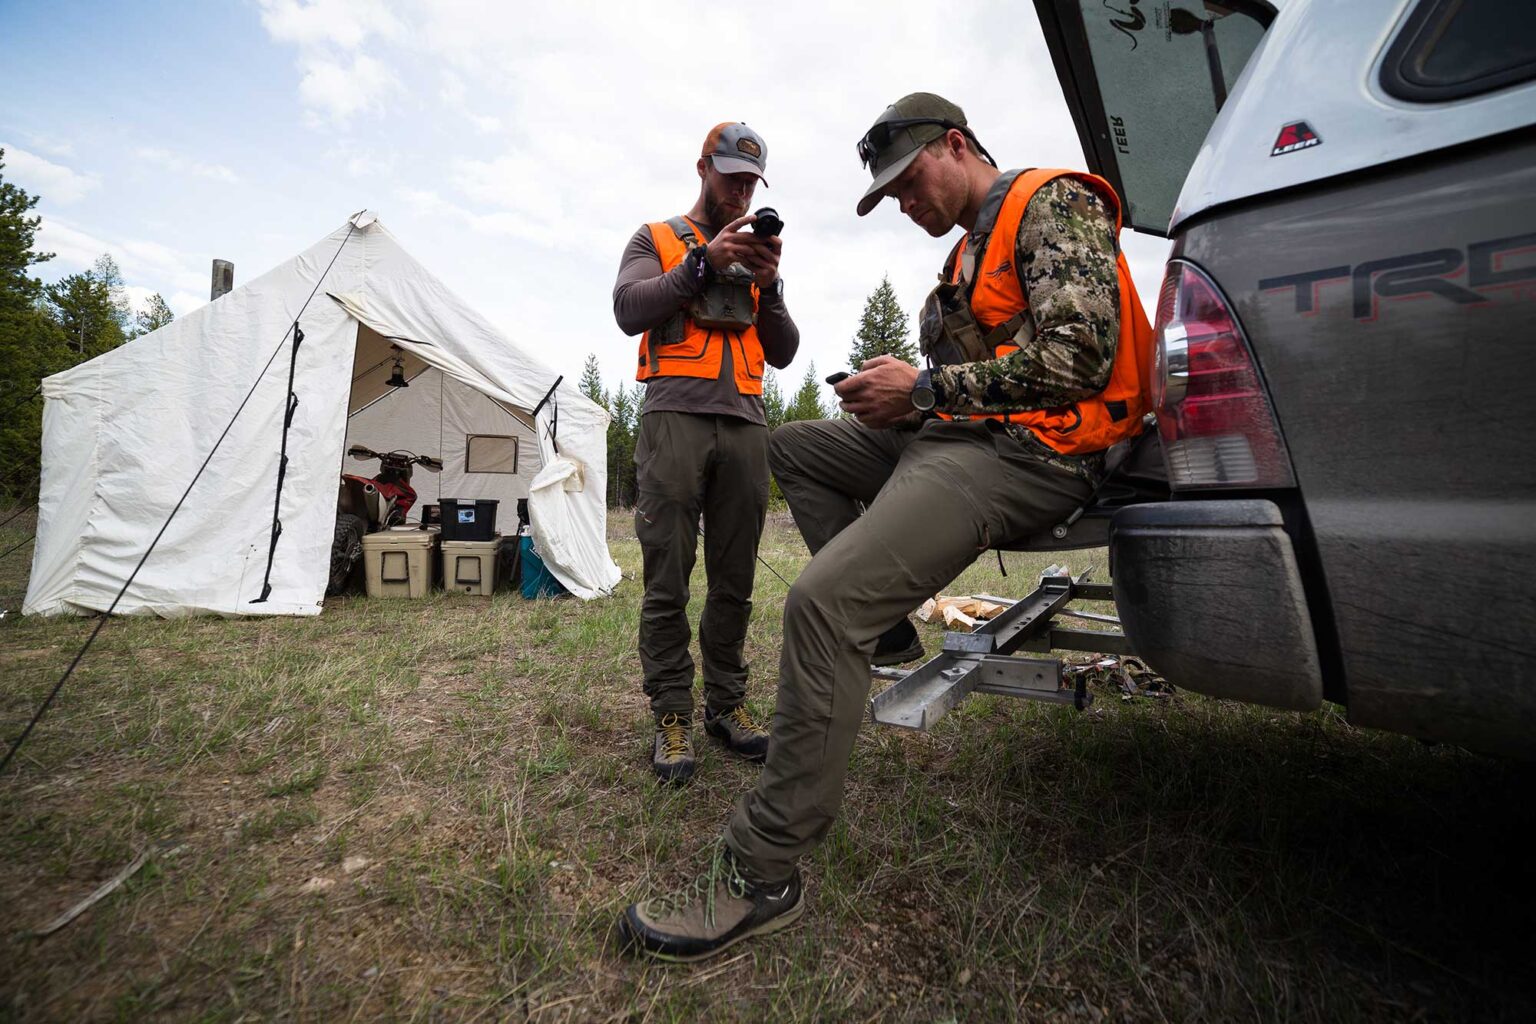 Arkansas Hunt Zones Maps, Regulations & Land Access